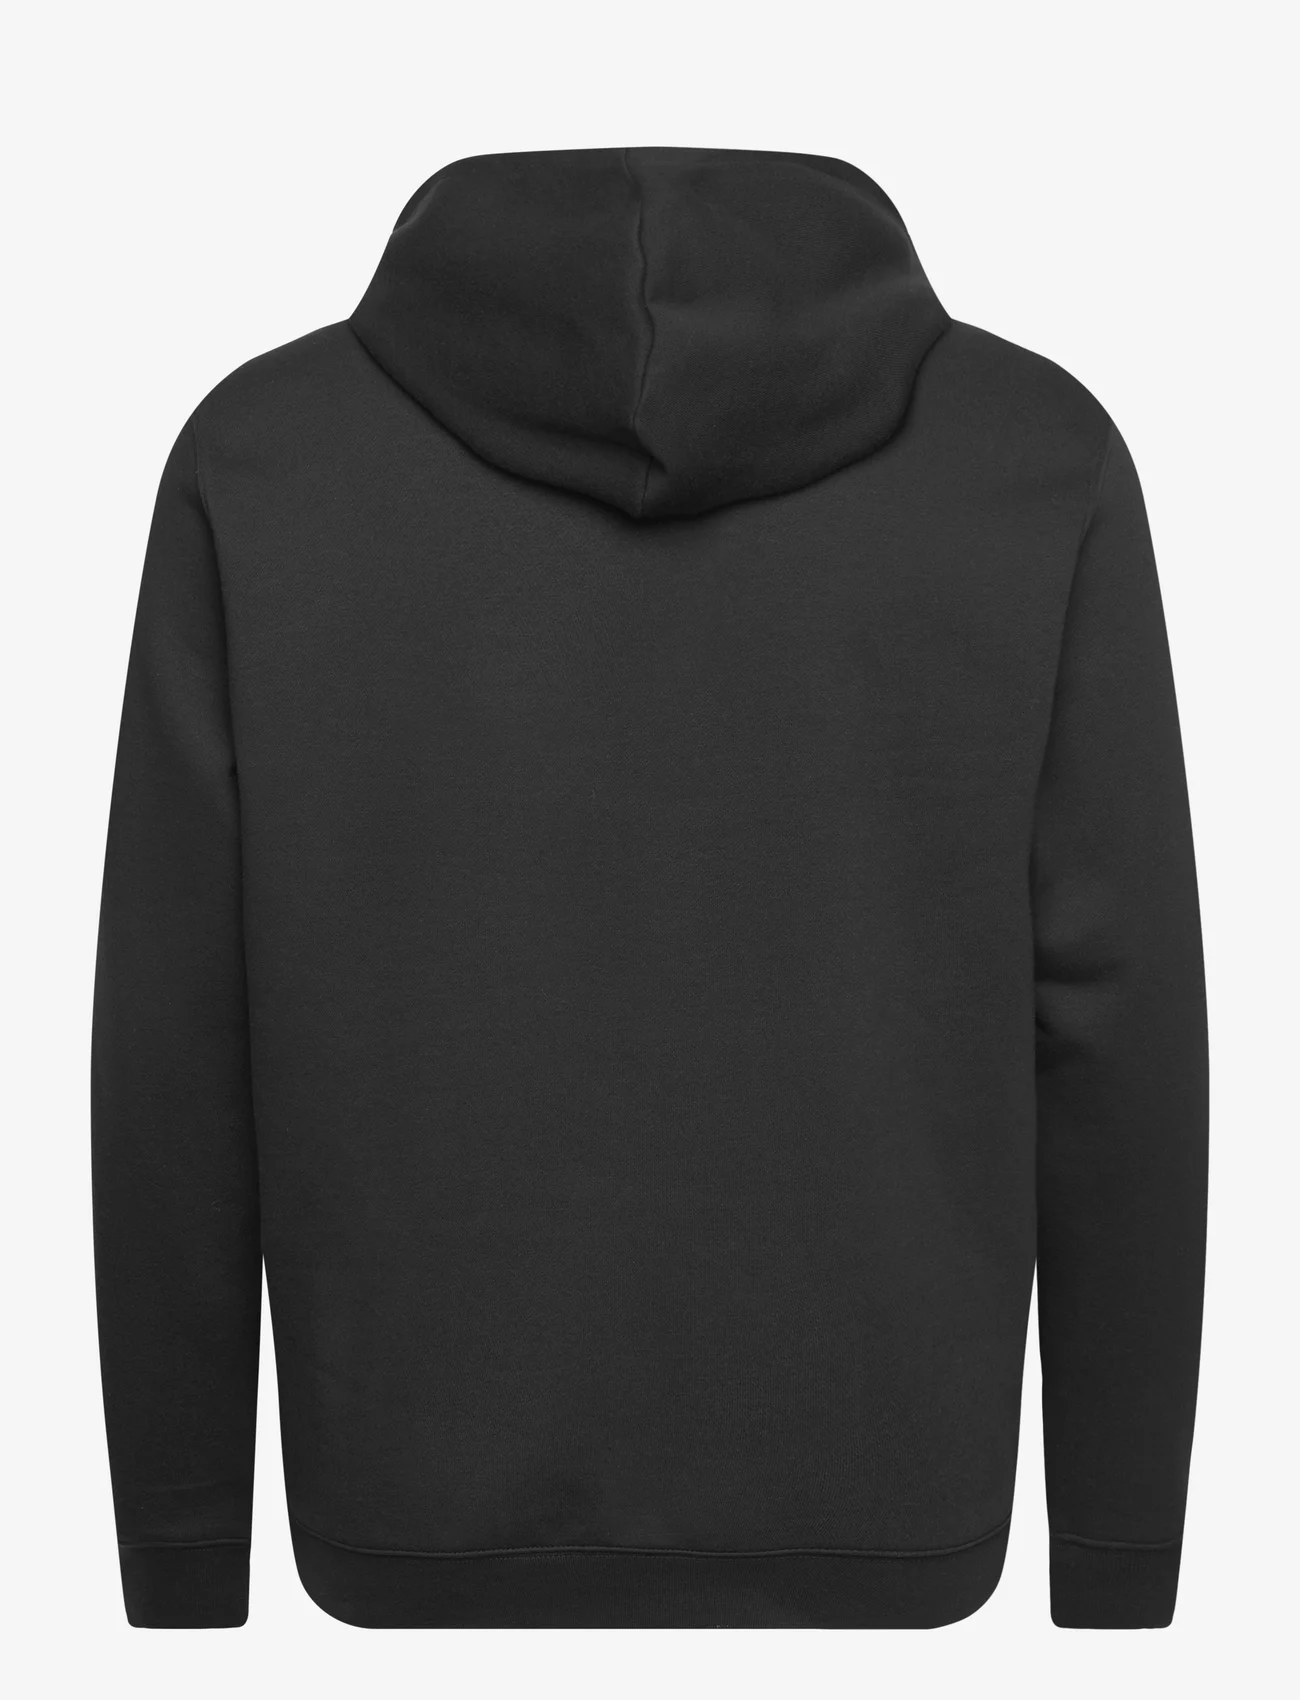 adidas Originals - ADICOLOR CLASSICS 3-STRIPES HOODY - hoodies - black - 1